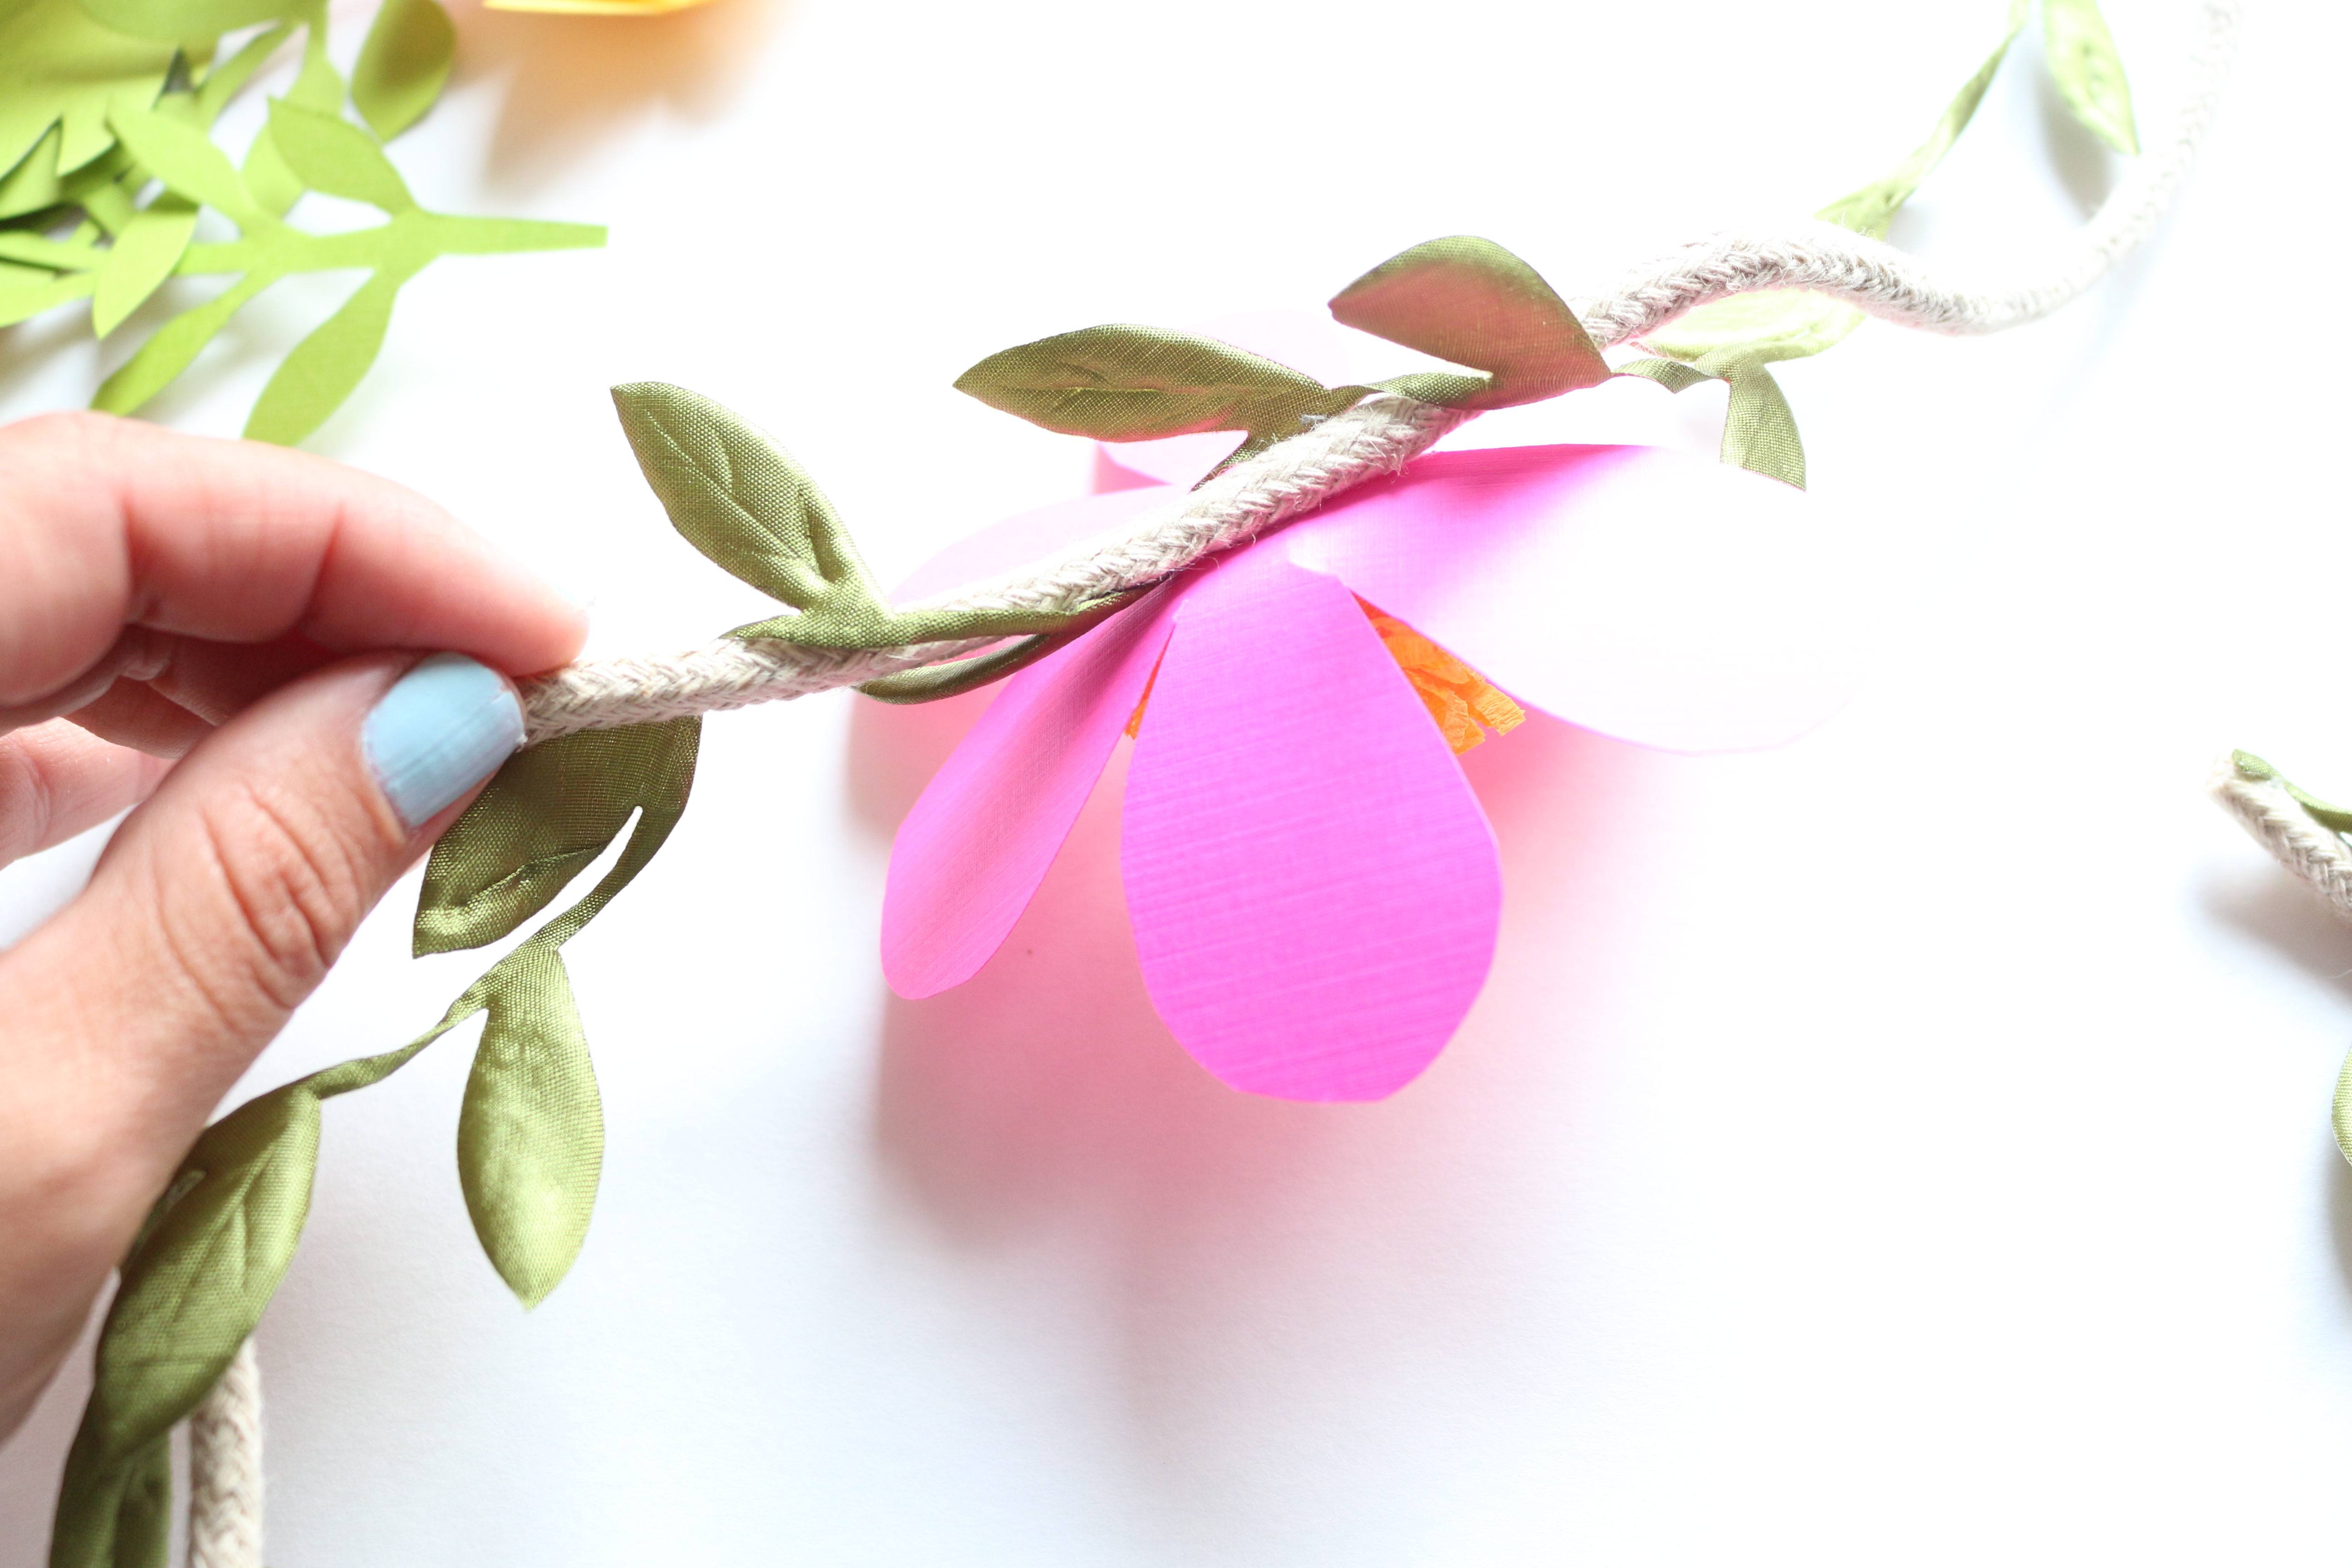 Greenery Paper Flower Garland Backdrop | Paper Source